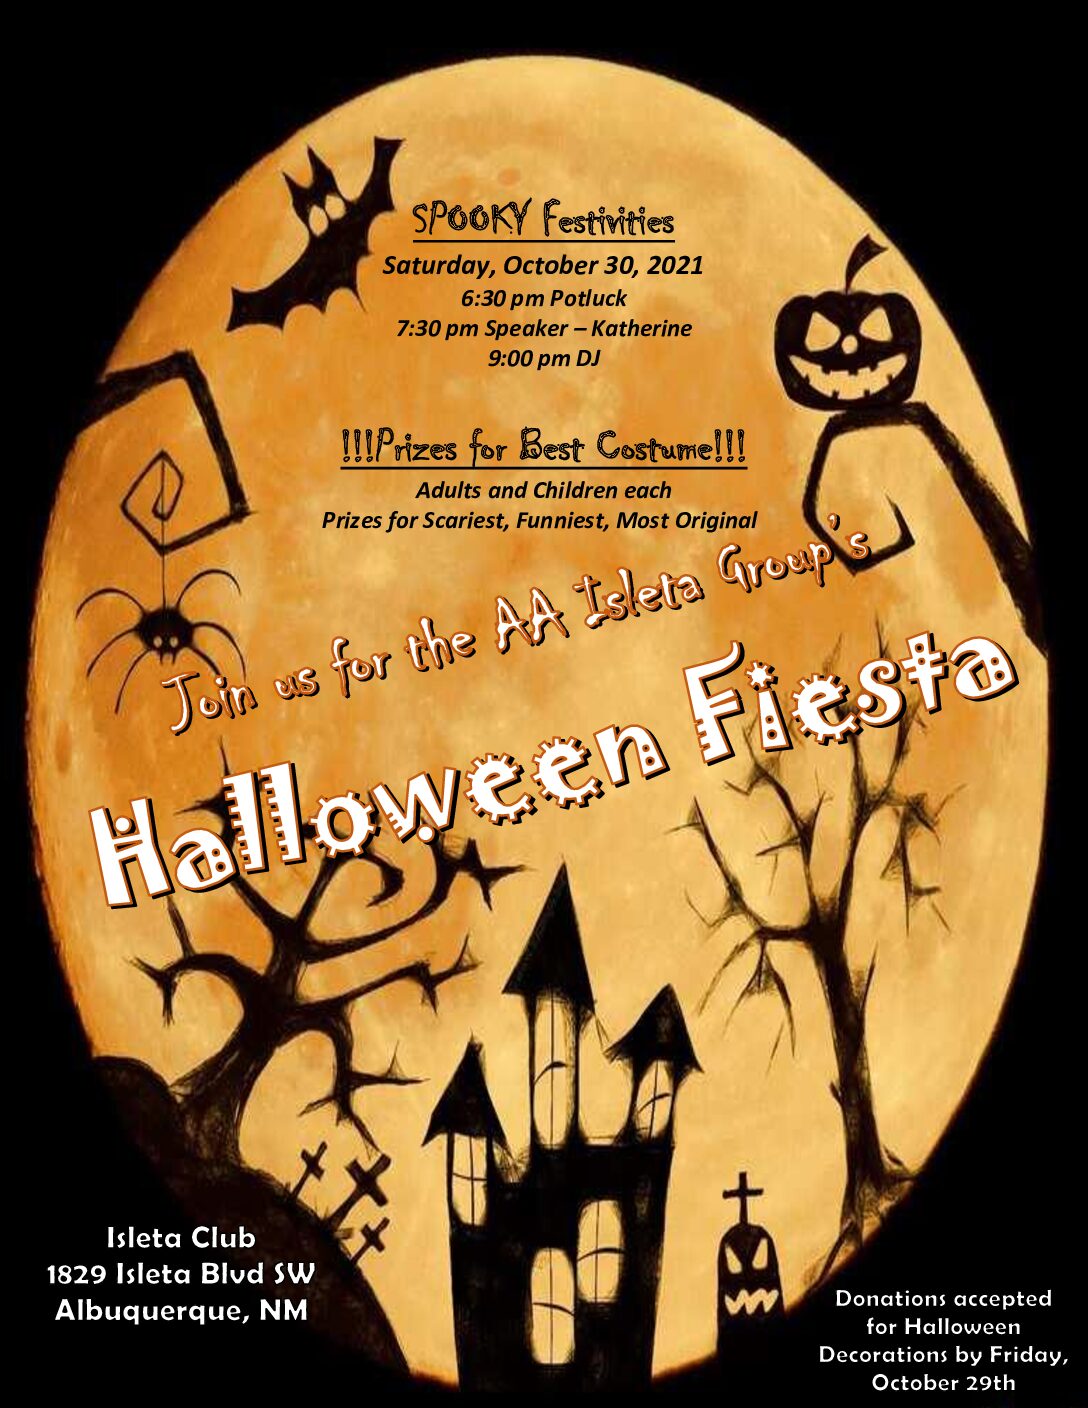 Isleta Club Halloween Fiesta!